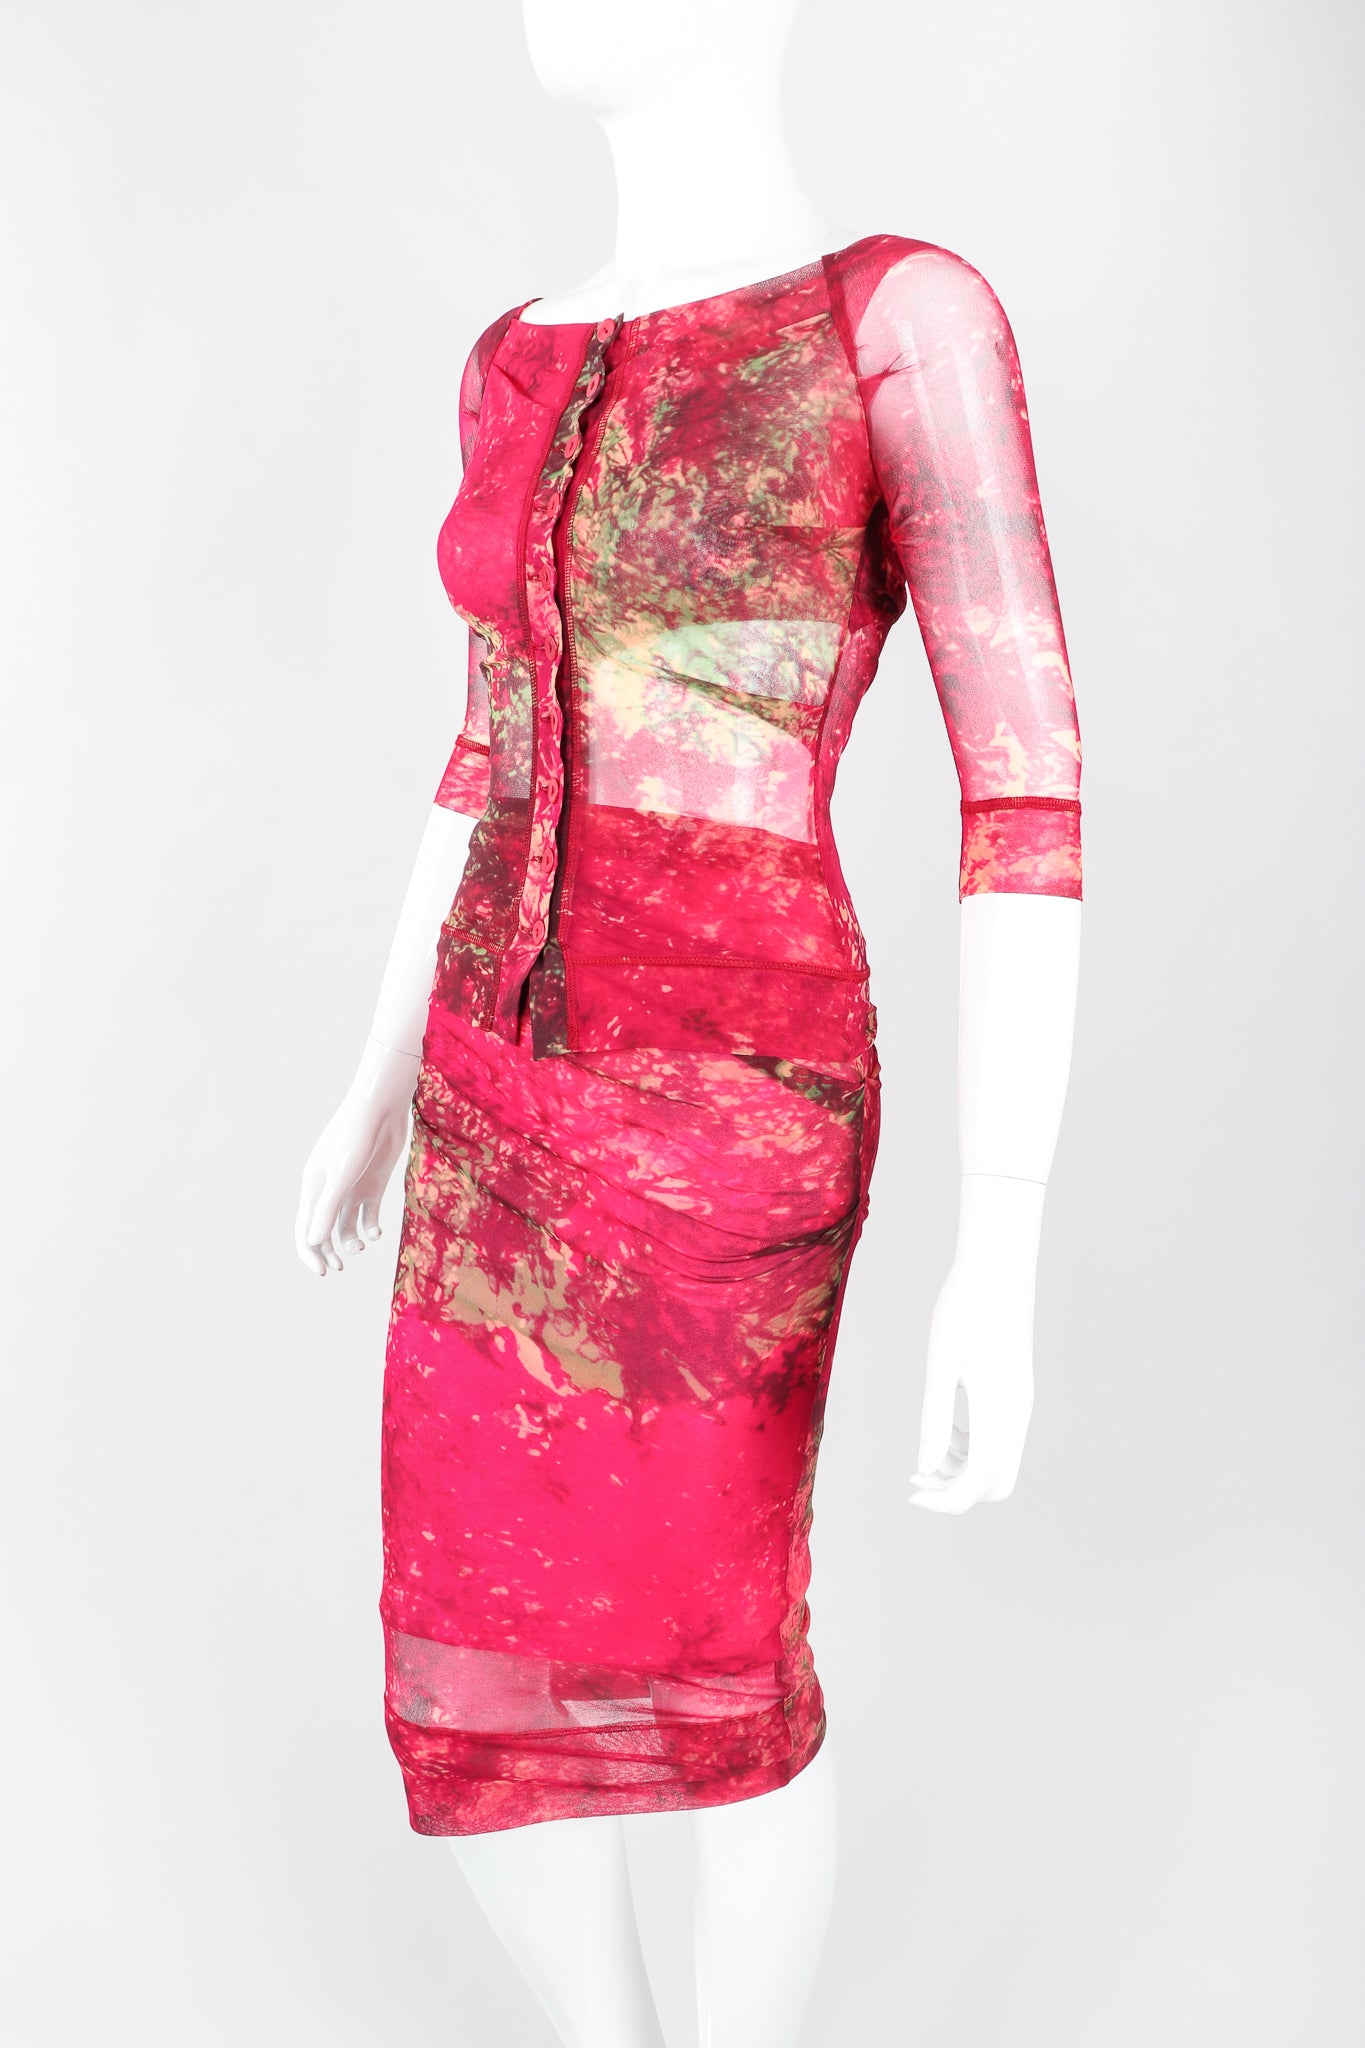 Recess Designer Consignment Vintage Plein Sud Bodycon Sheer Mesh Top & Skirt Set Outfit Ensemble Los Angeles Resale